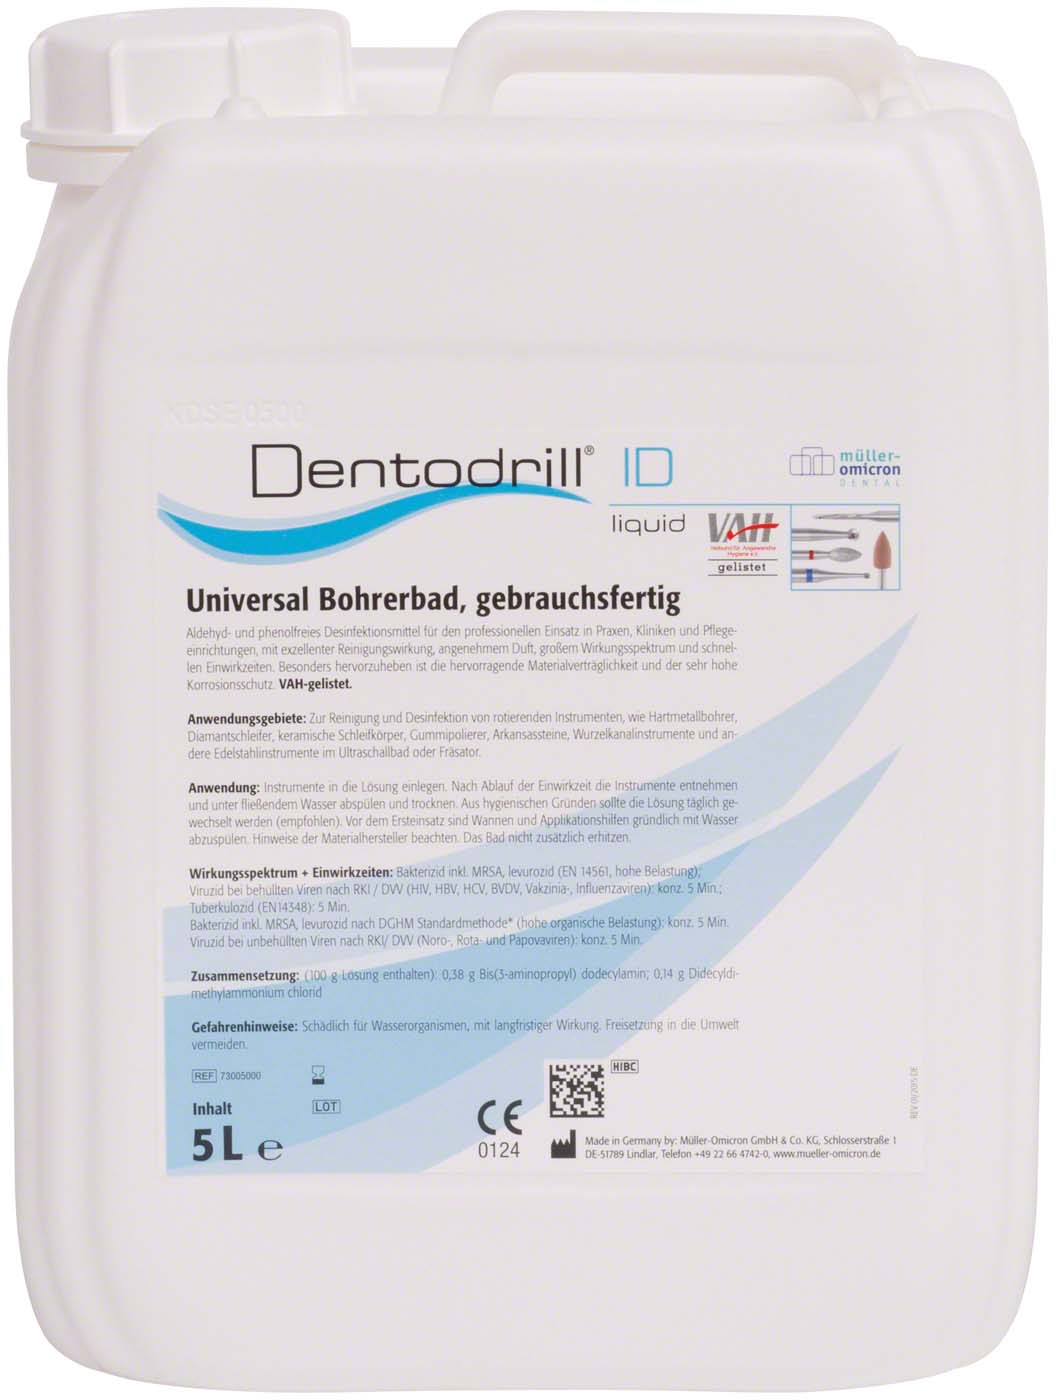 Dentodrill® ID liquid Müller-Omicron